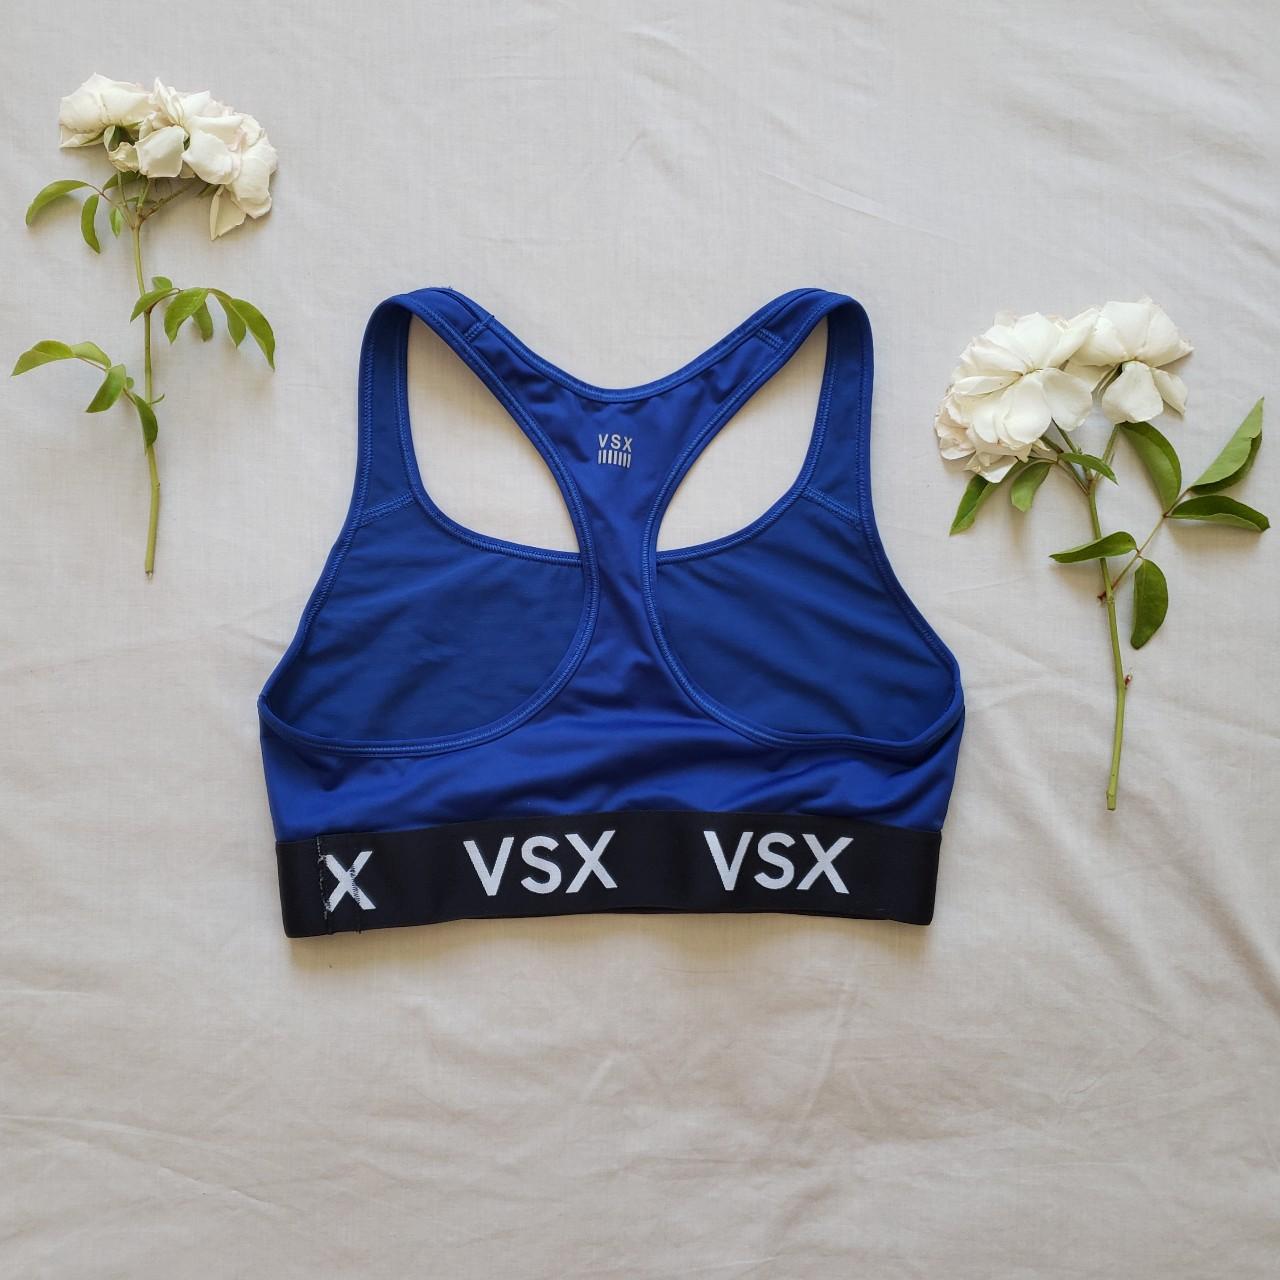 Victoria's Secret VSX Blue The Player Racerback Sport Bra Size